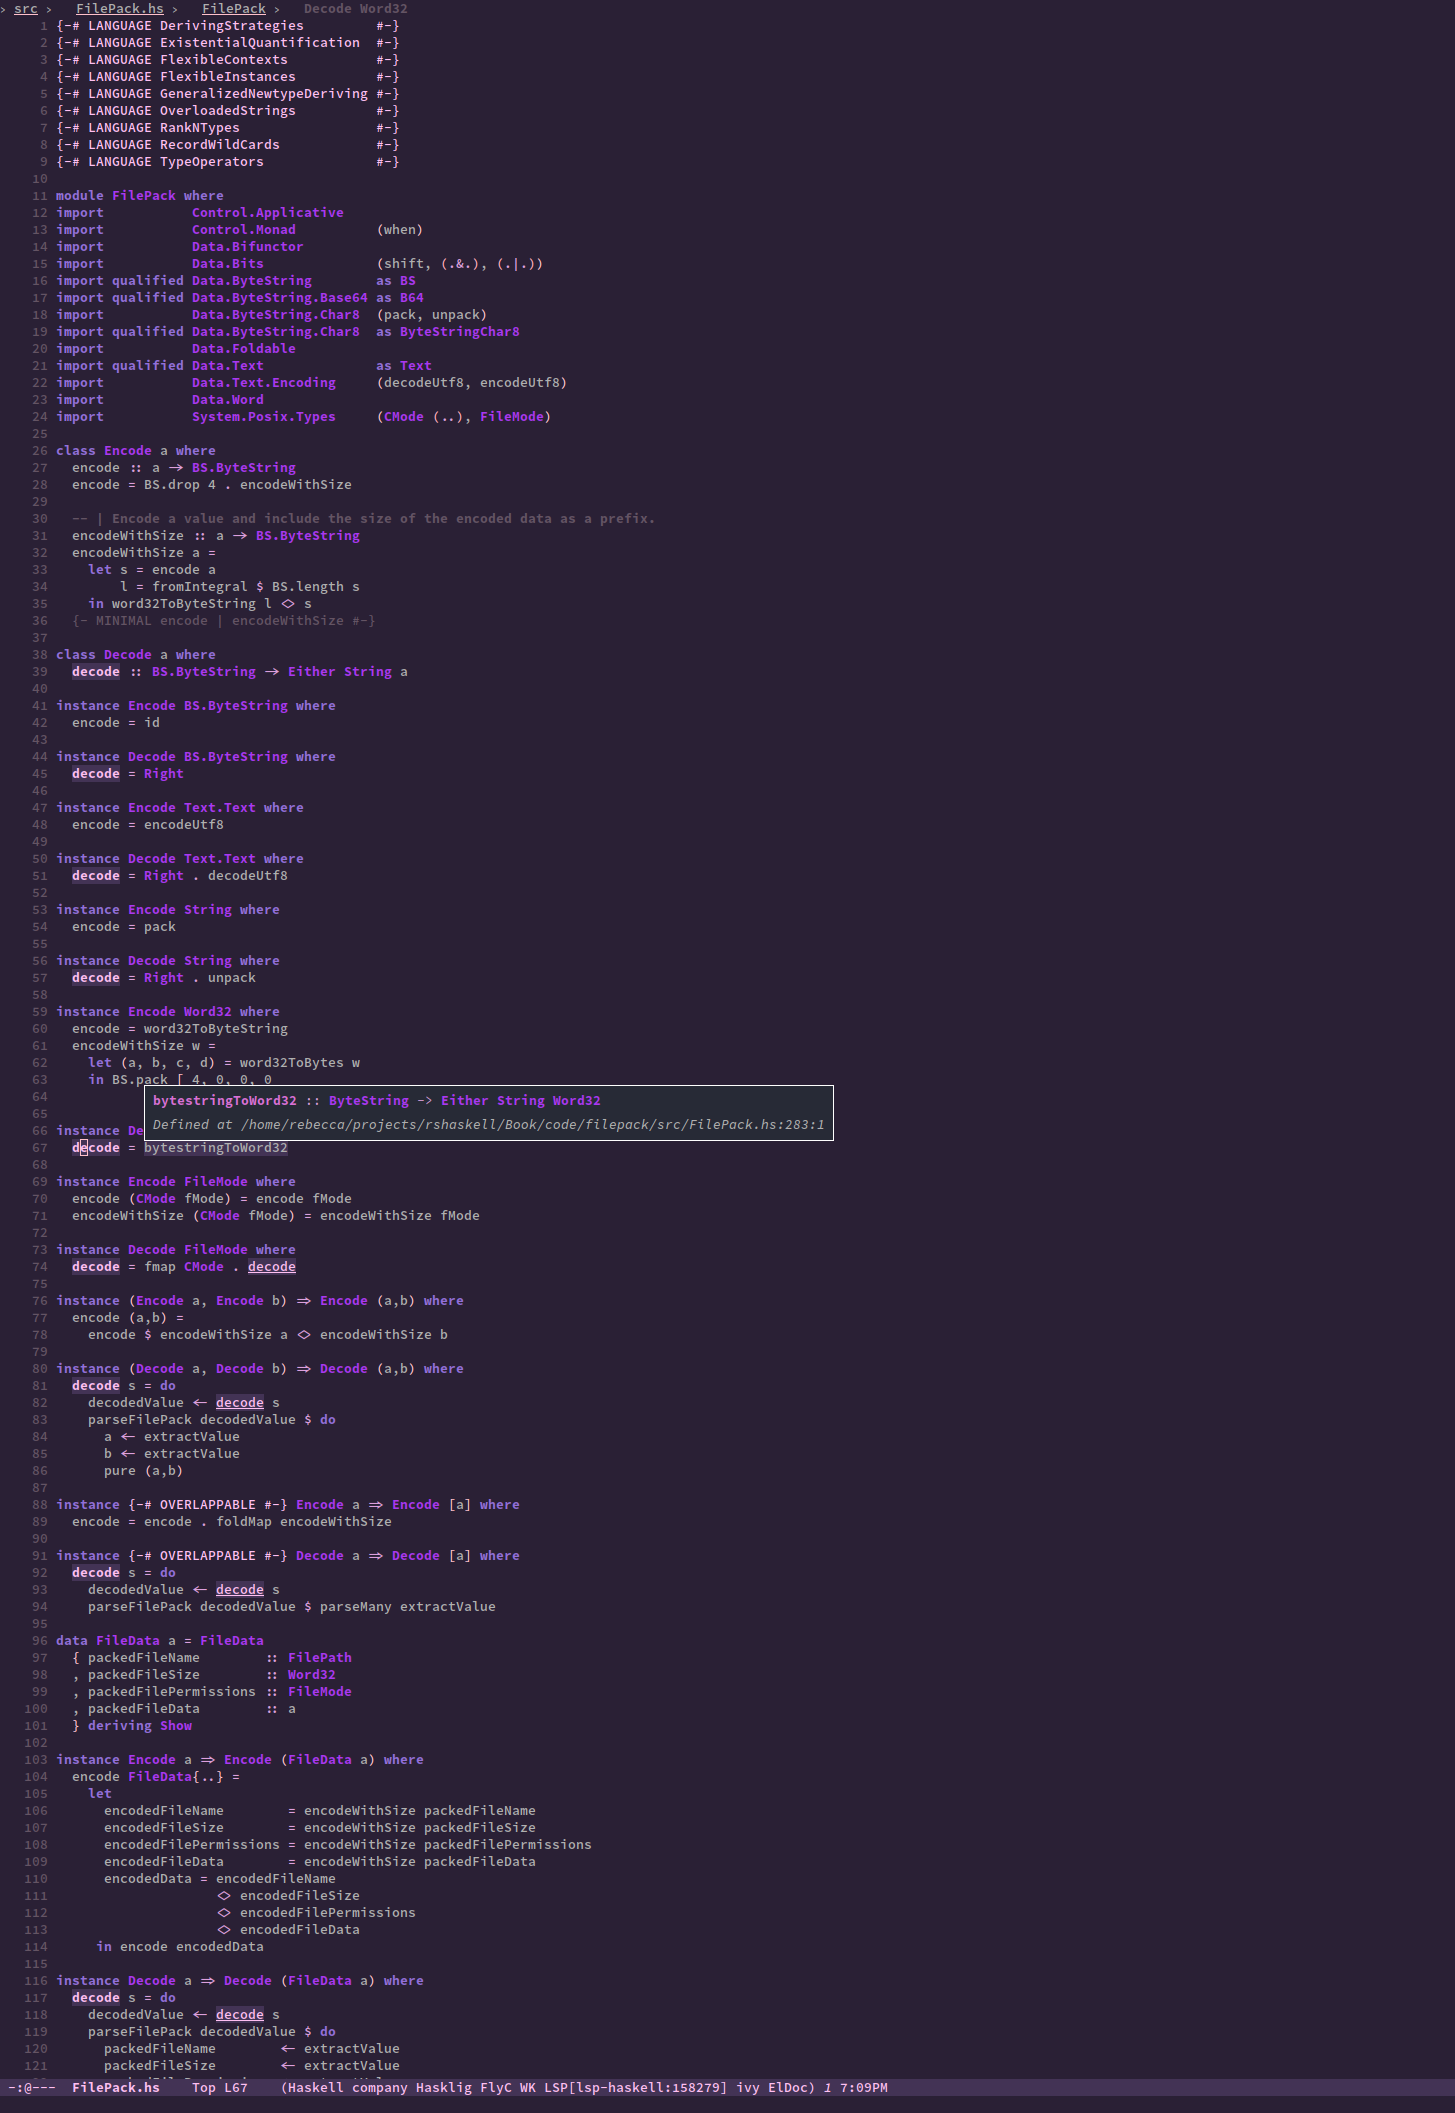 Haskell Screenshot